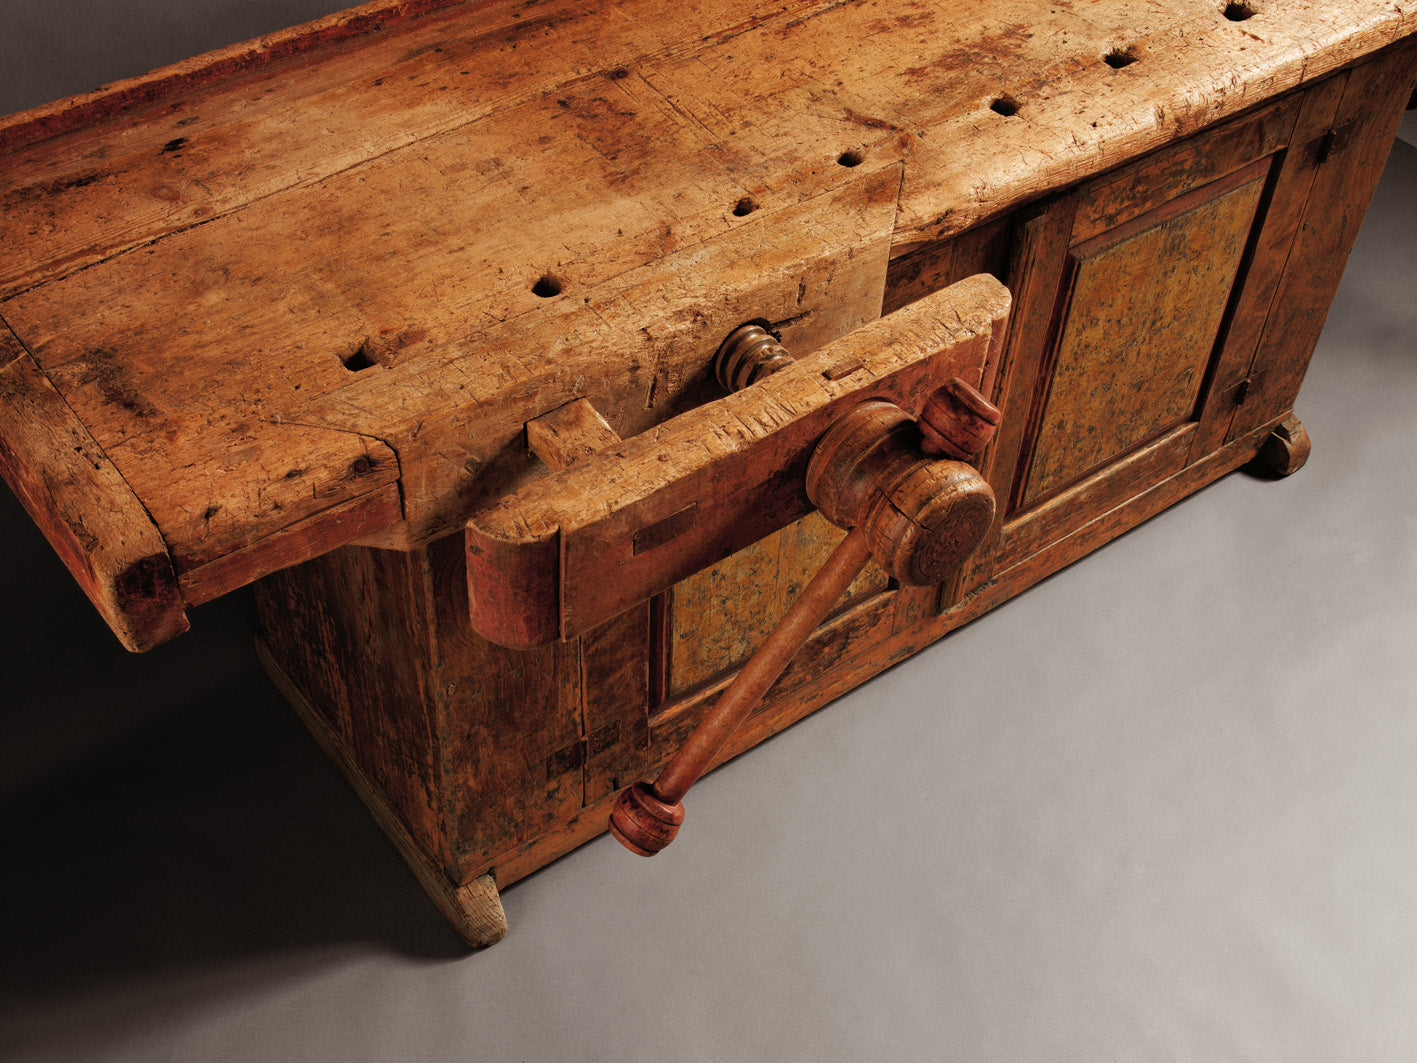 Craftsman's Bench